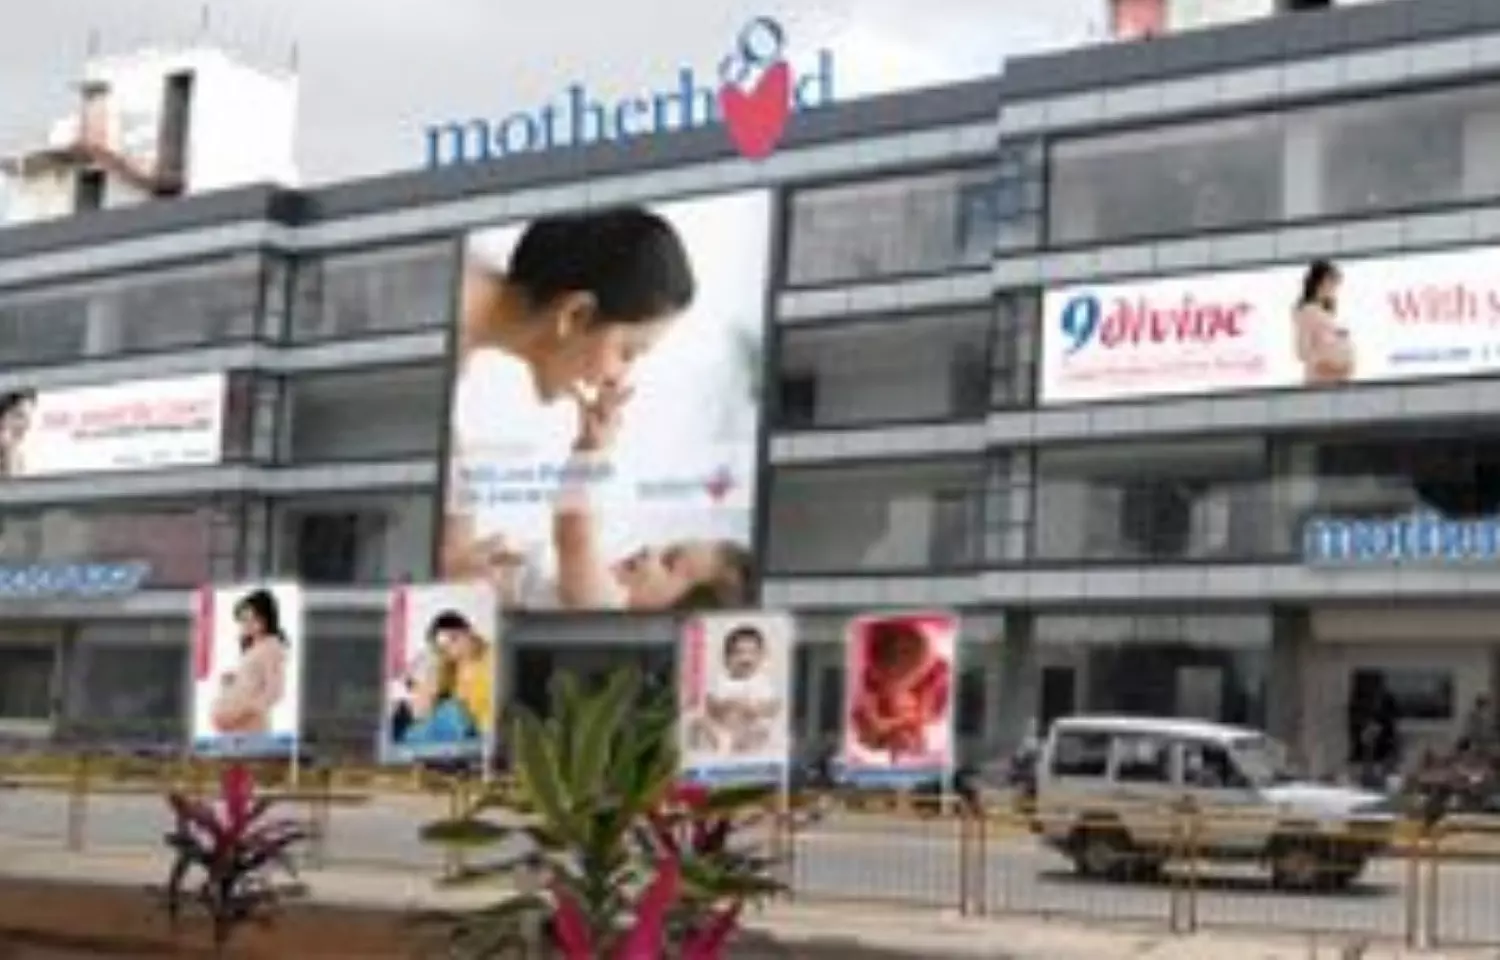 Motherhood Hospitals inks strategic partnership with Chaitanya Hospital